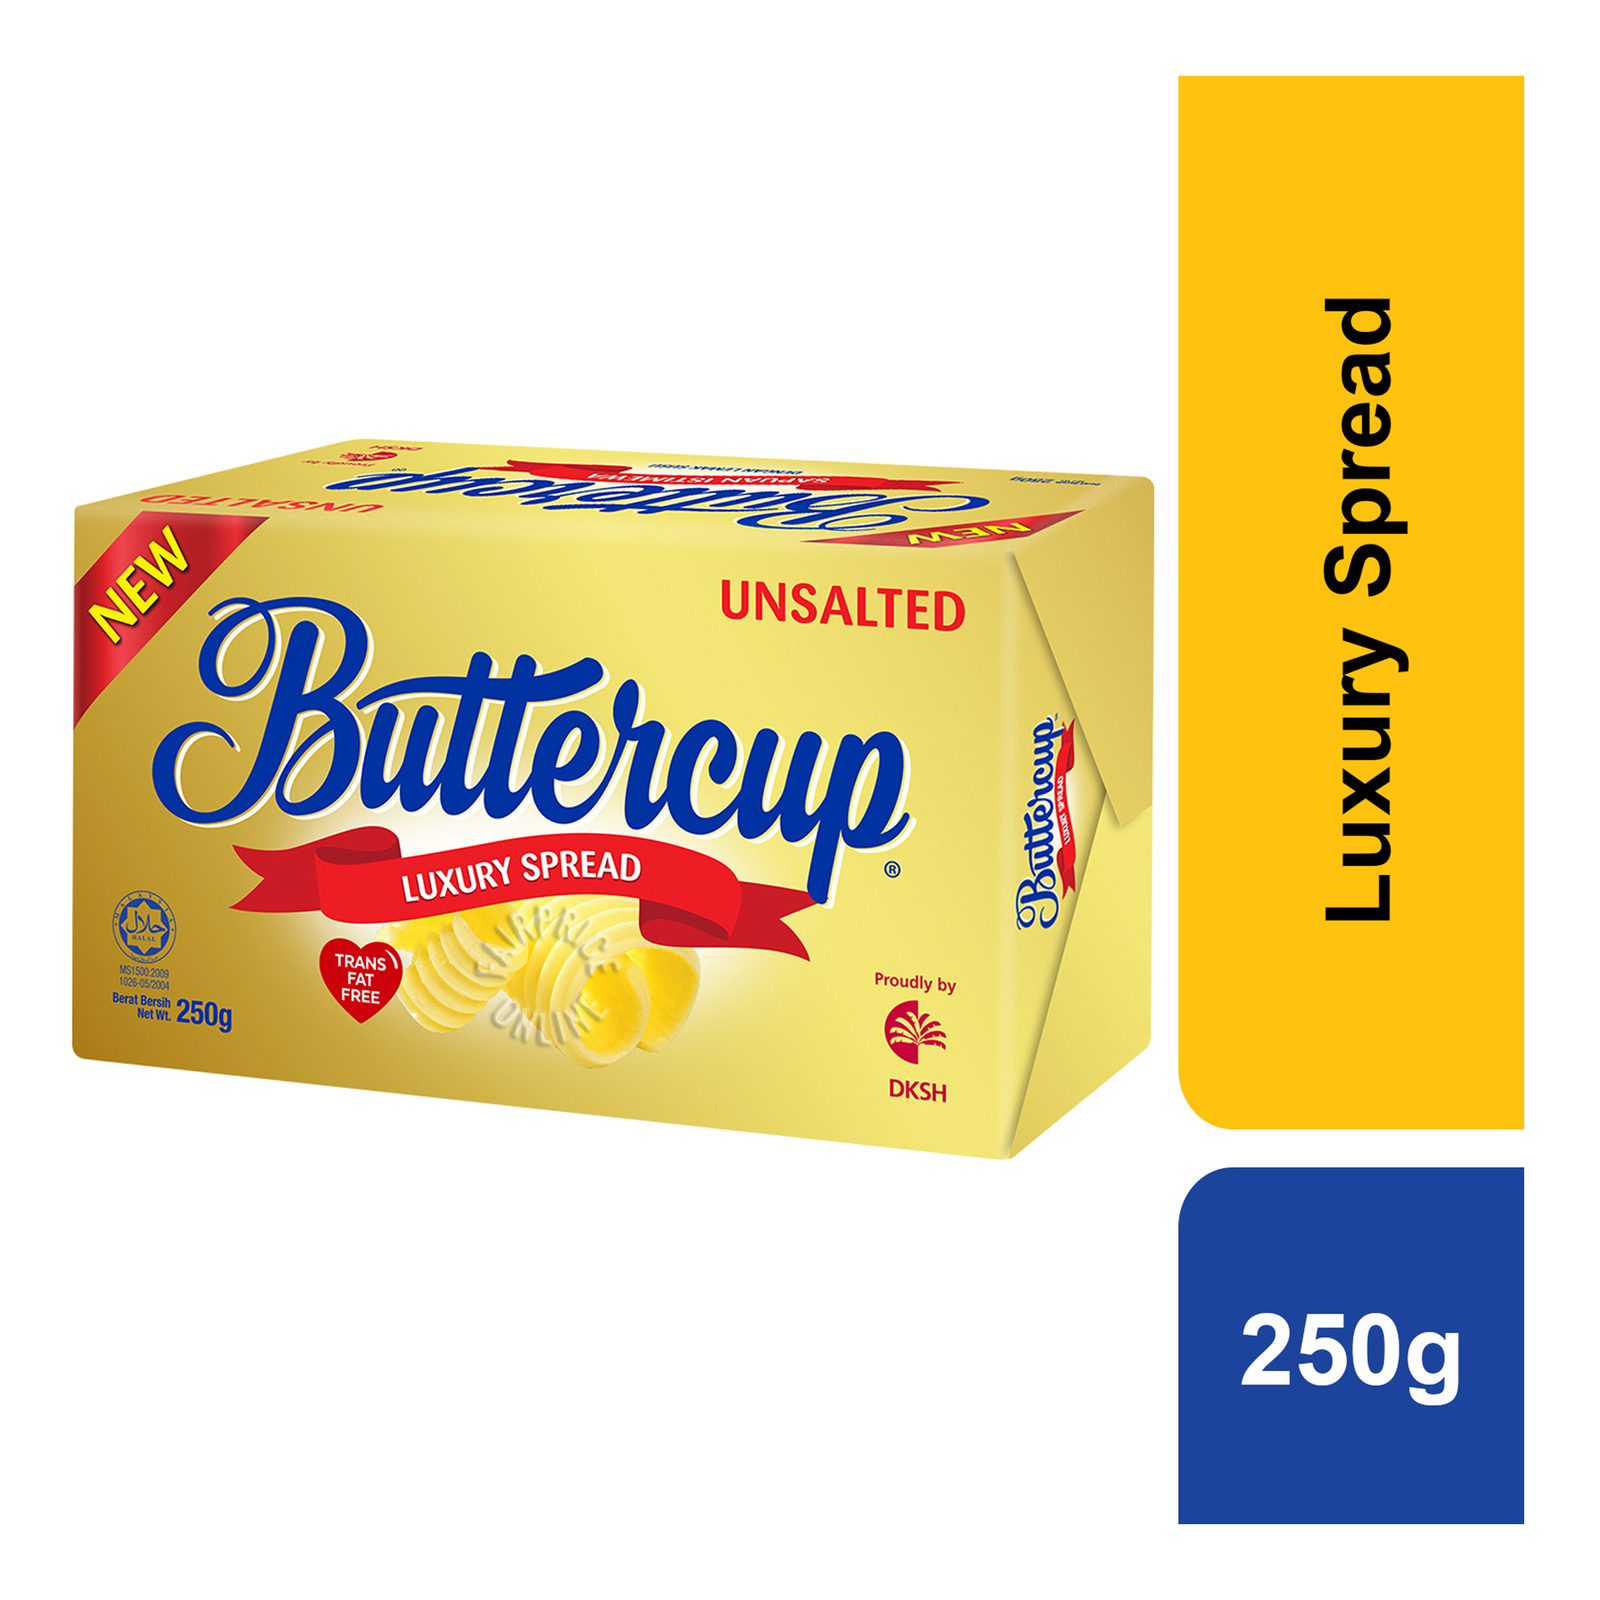 Buttercup Luxury Spread Block - Unsalted